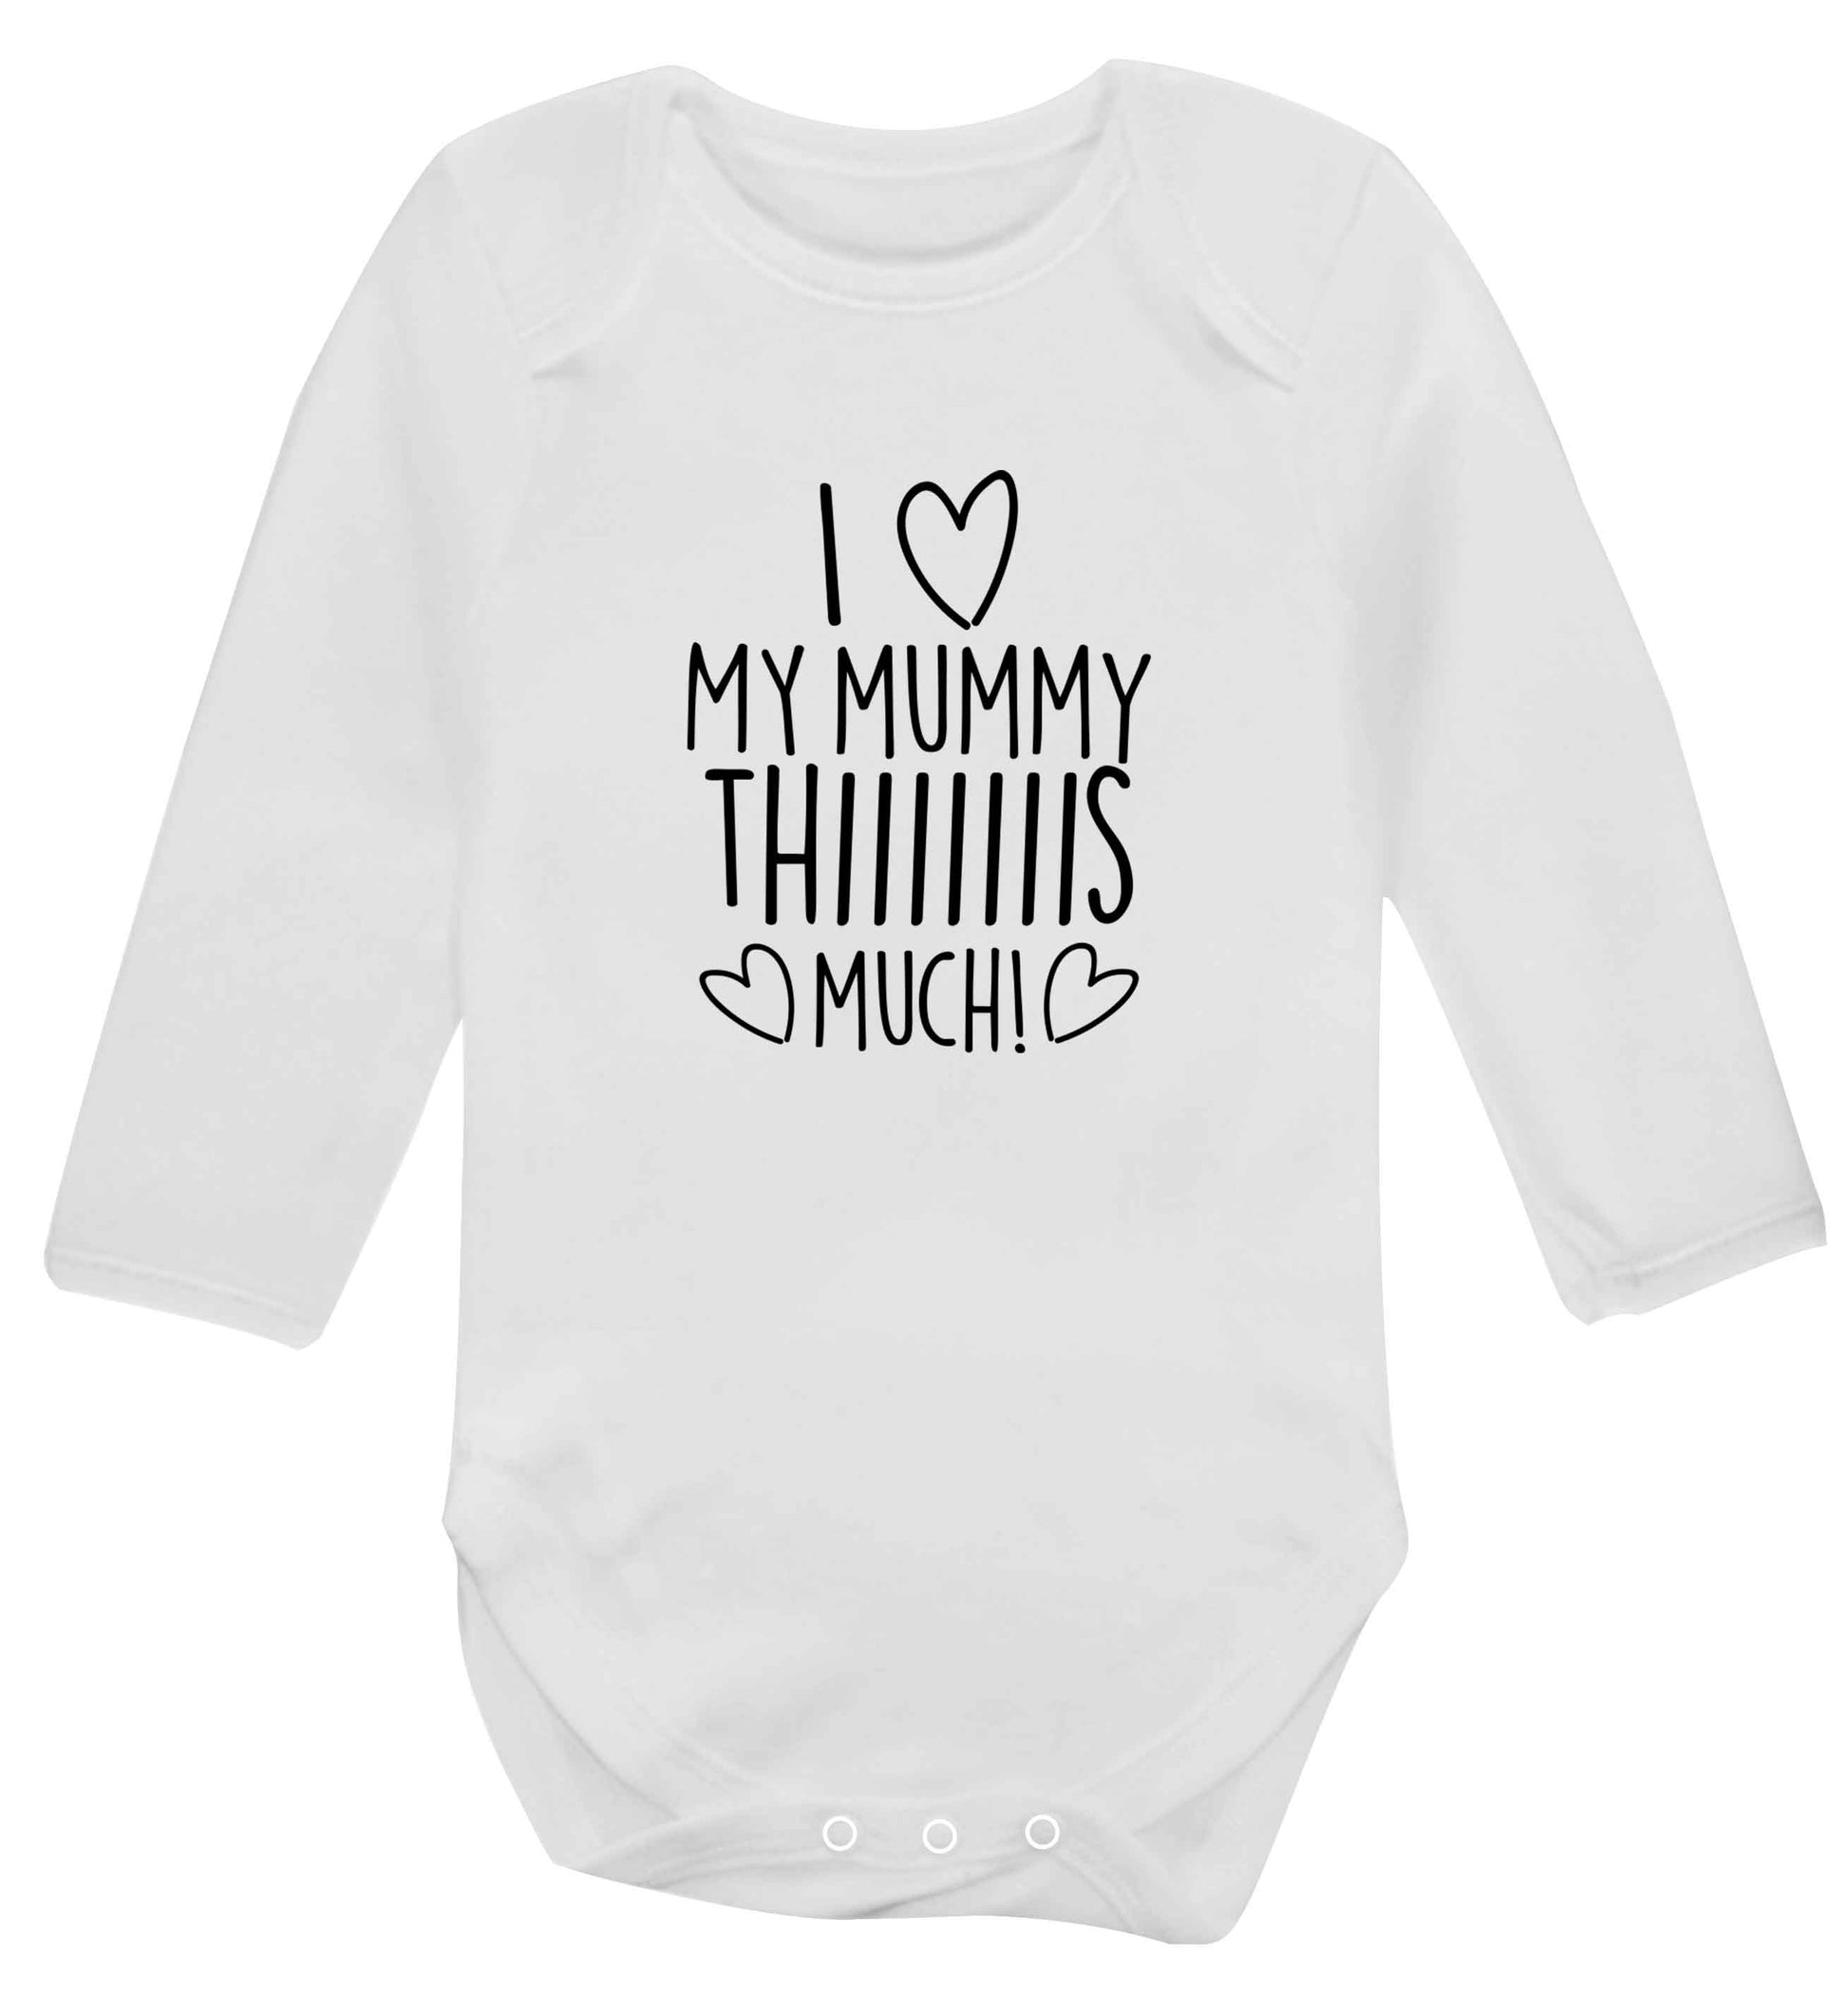 I love my mummy thiiiiis much! baby vest long sleeved white 6-12 months